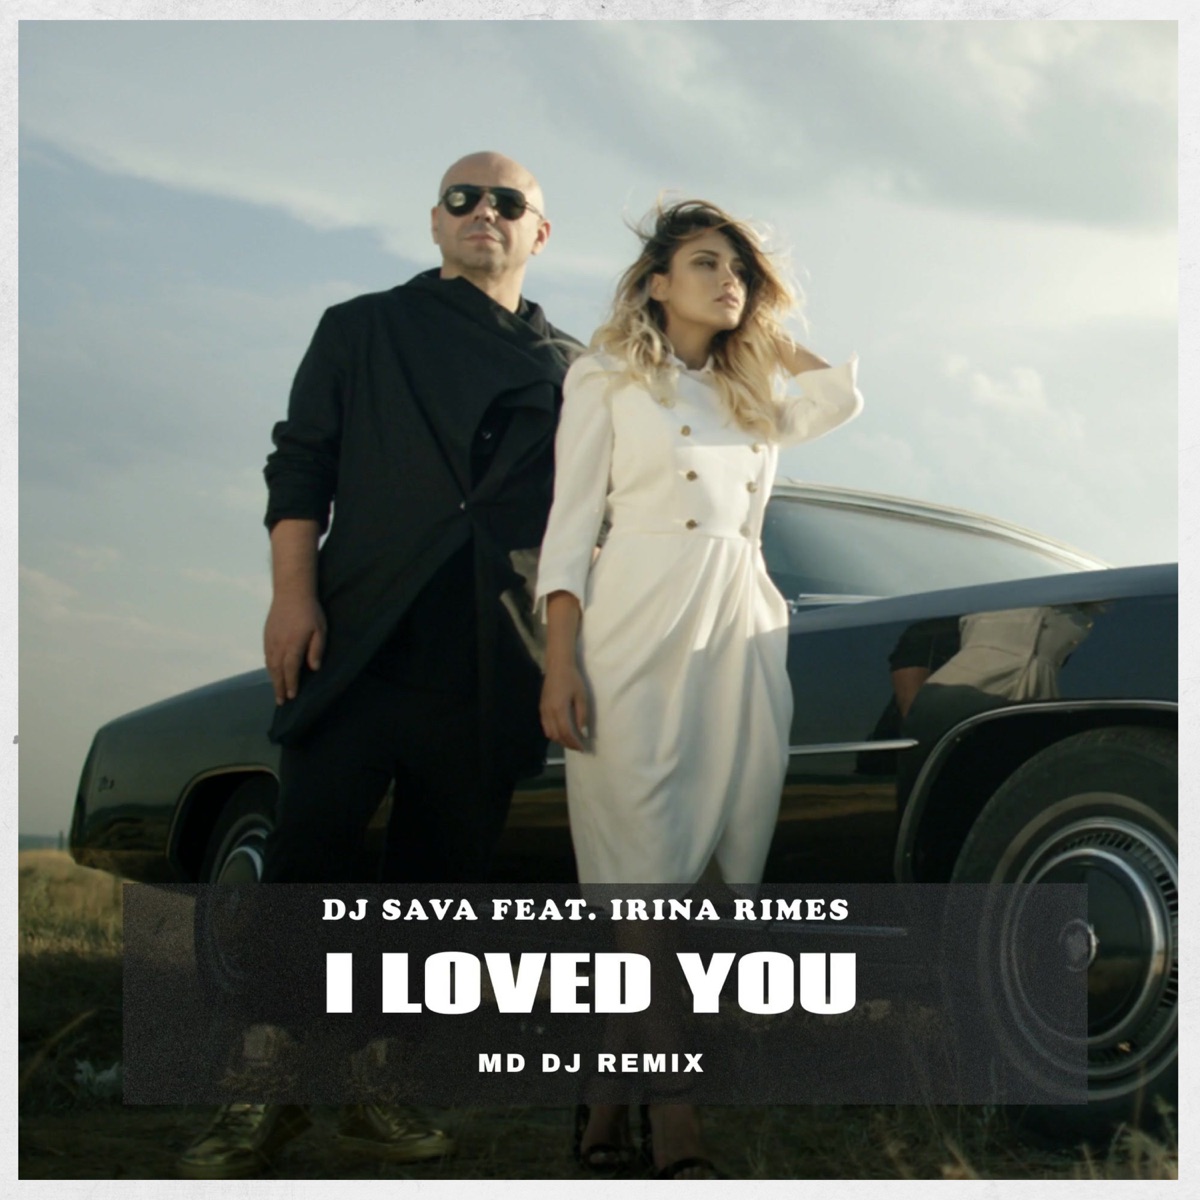 I Loved You (MD Dj Remix) [feat. Irina Rimes] - Single - Album by Dj Sava -  Apple Music